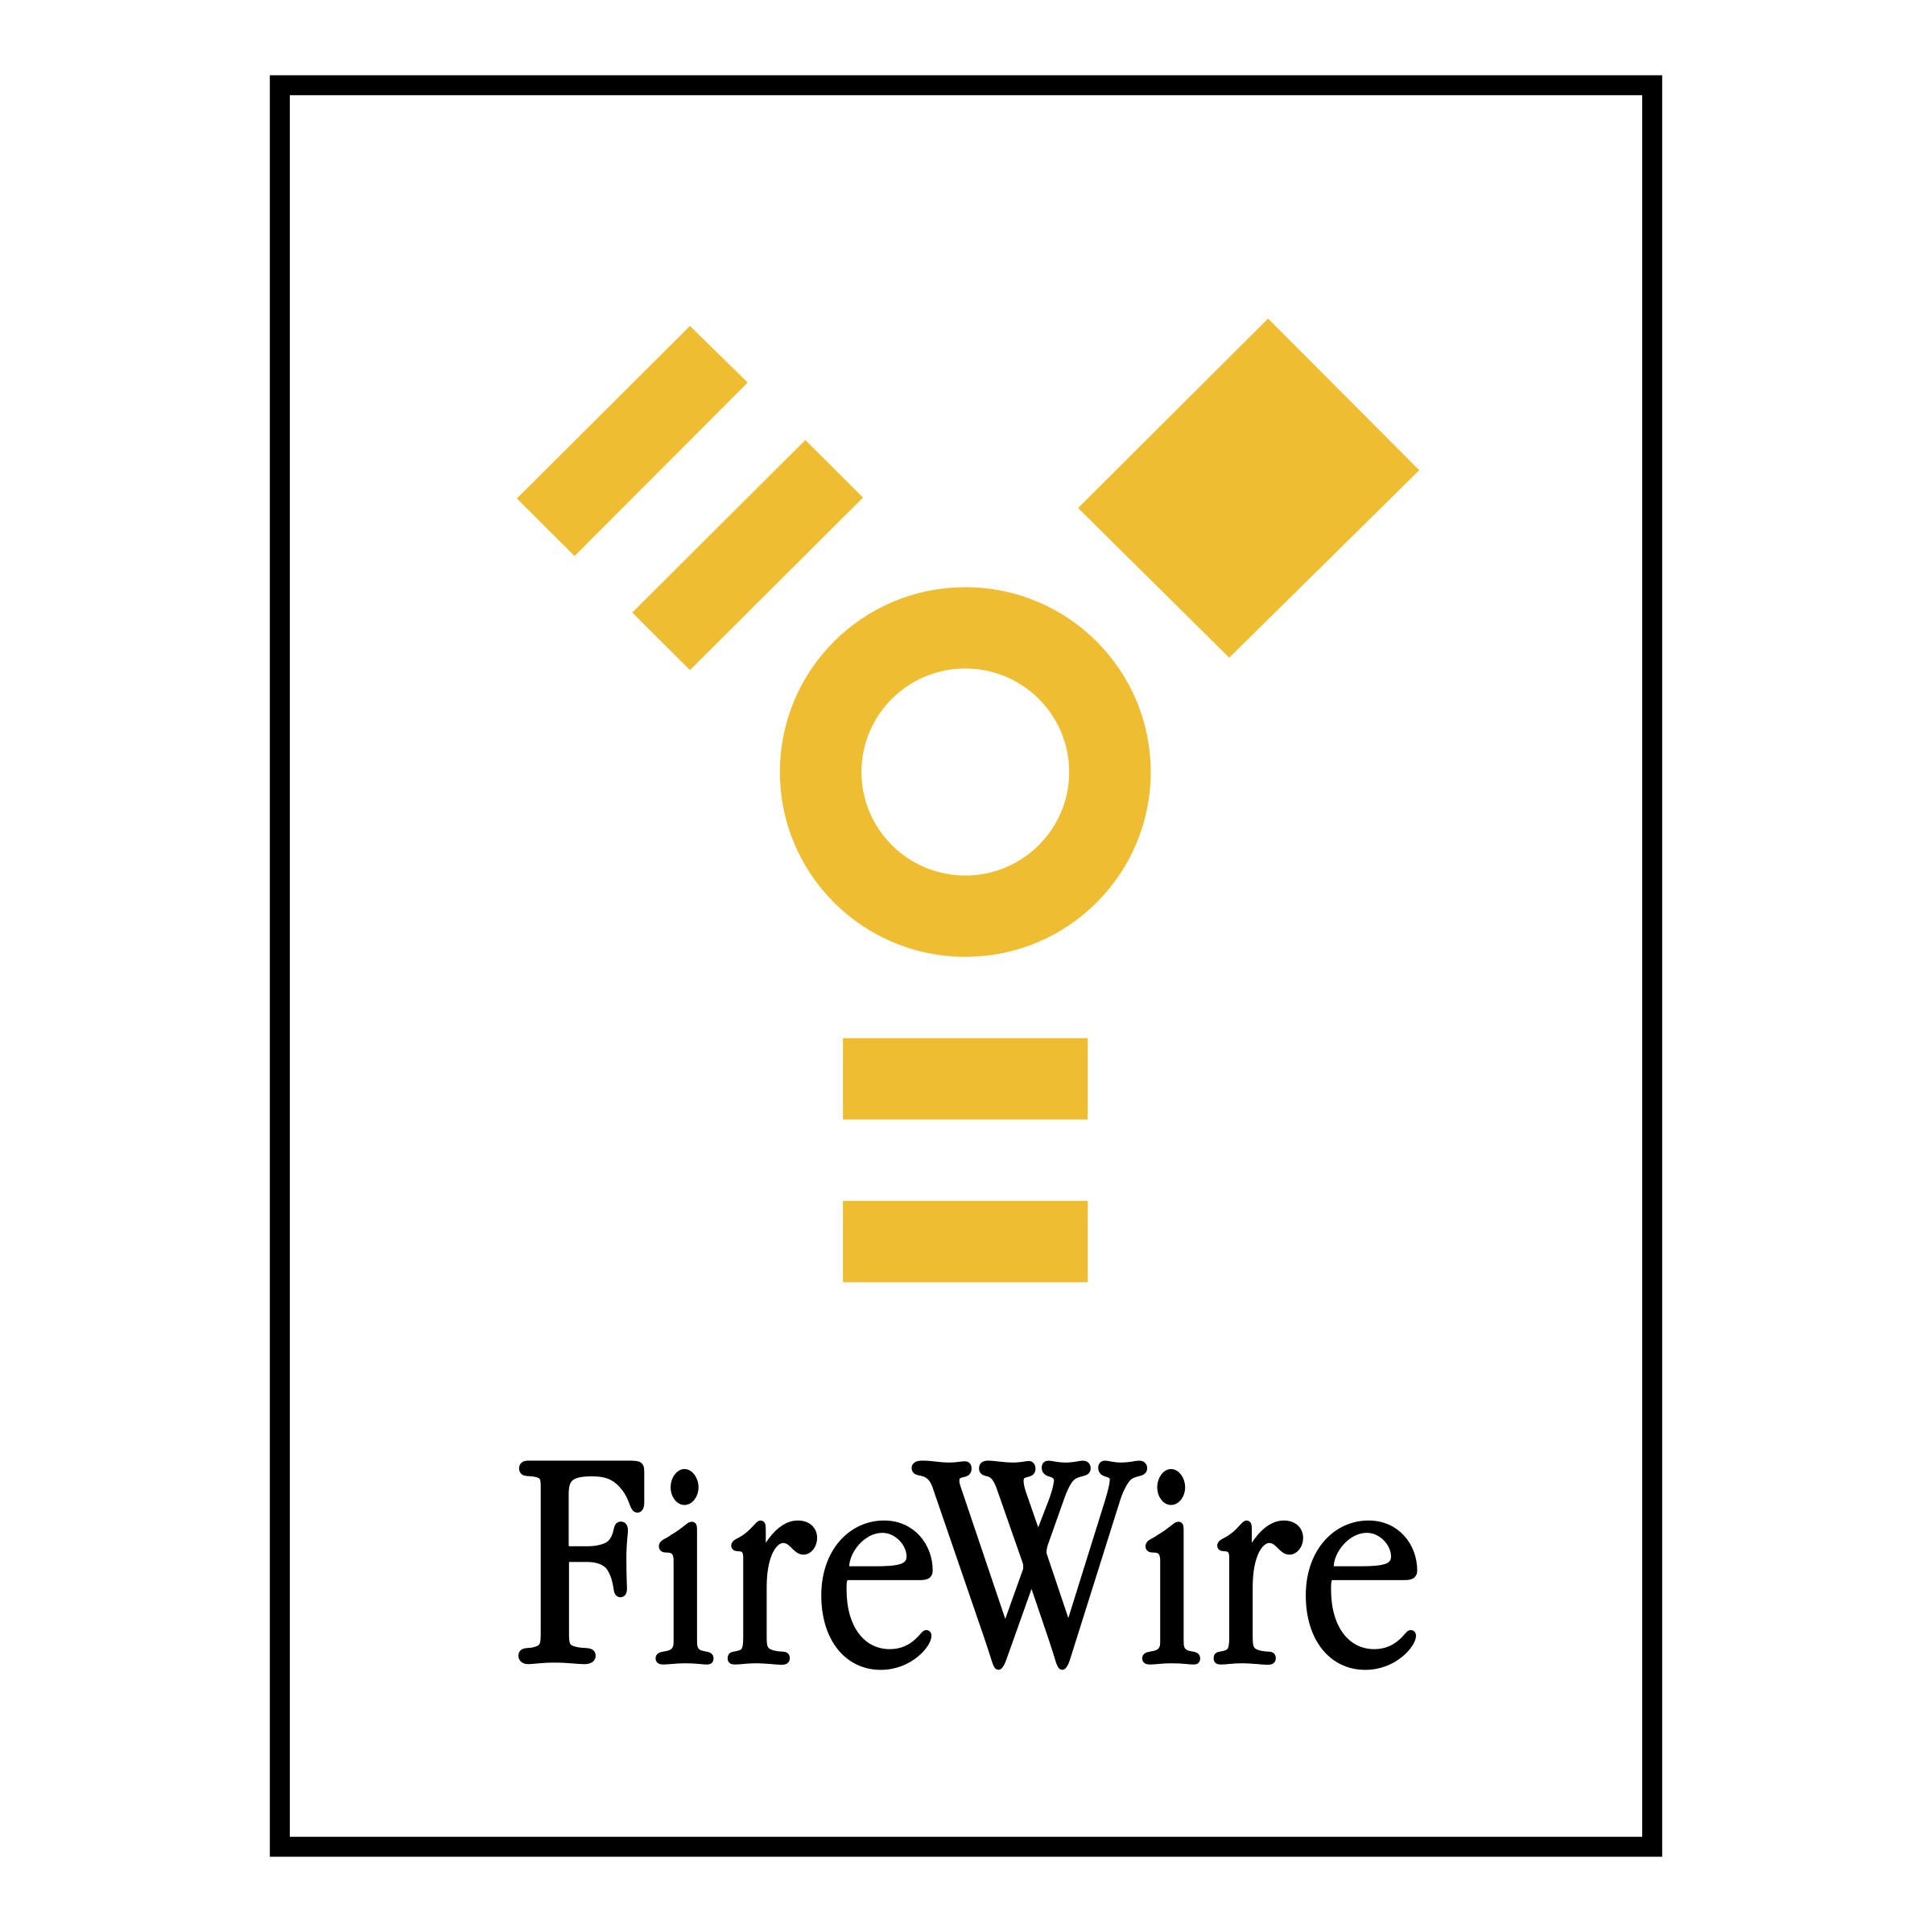 FireWire Logo - FireWire Logo PNG Transparent & SVG Vector - Freebie Supply